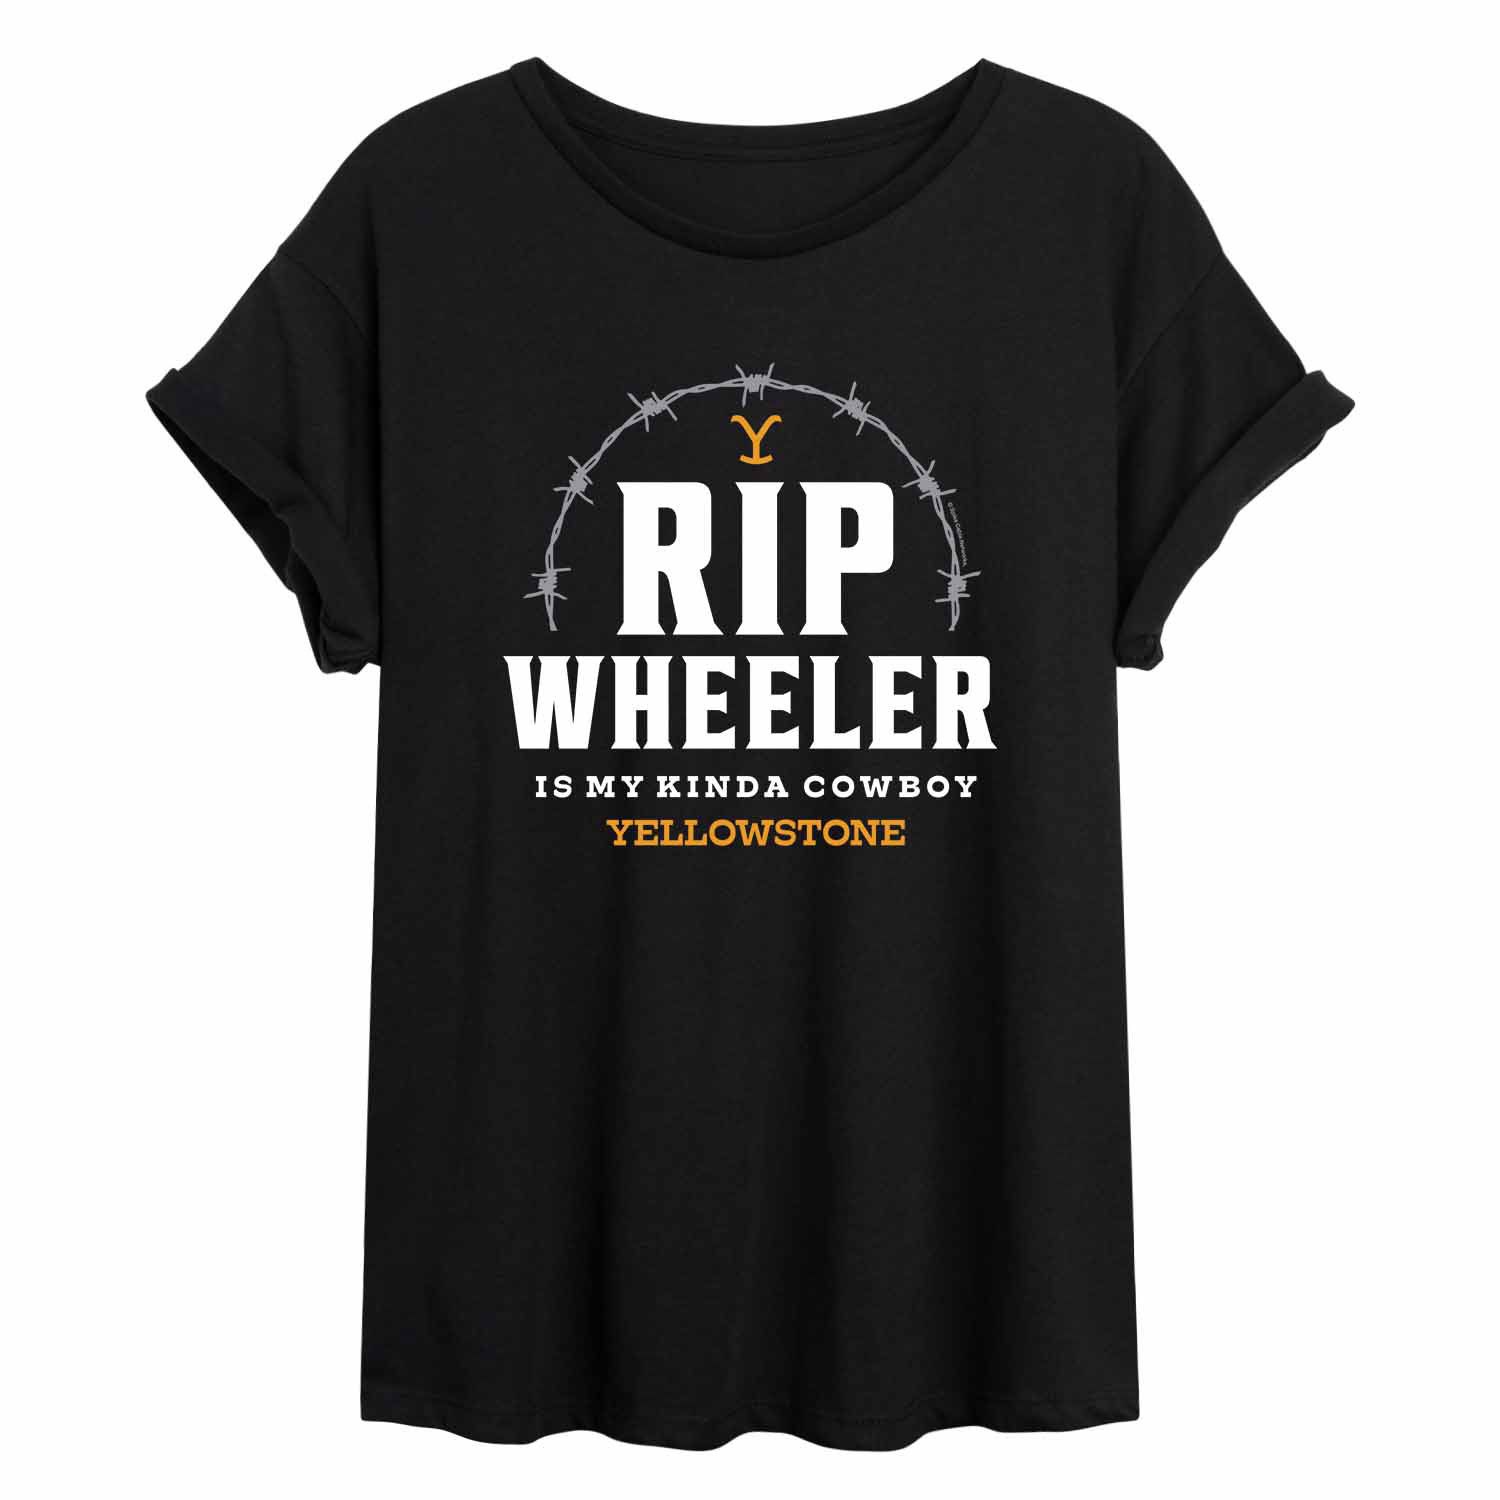 Юниорская футболка с струящимся рисунком Yellowstone Wheeler Licensed Character